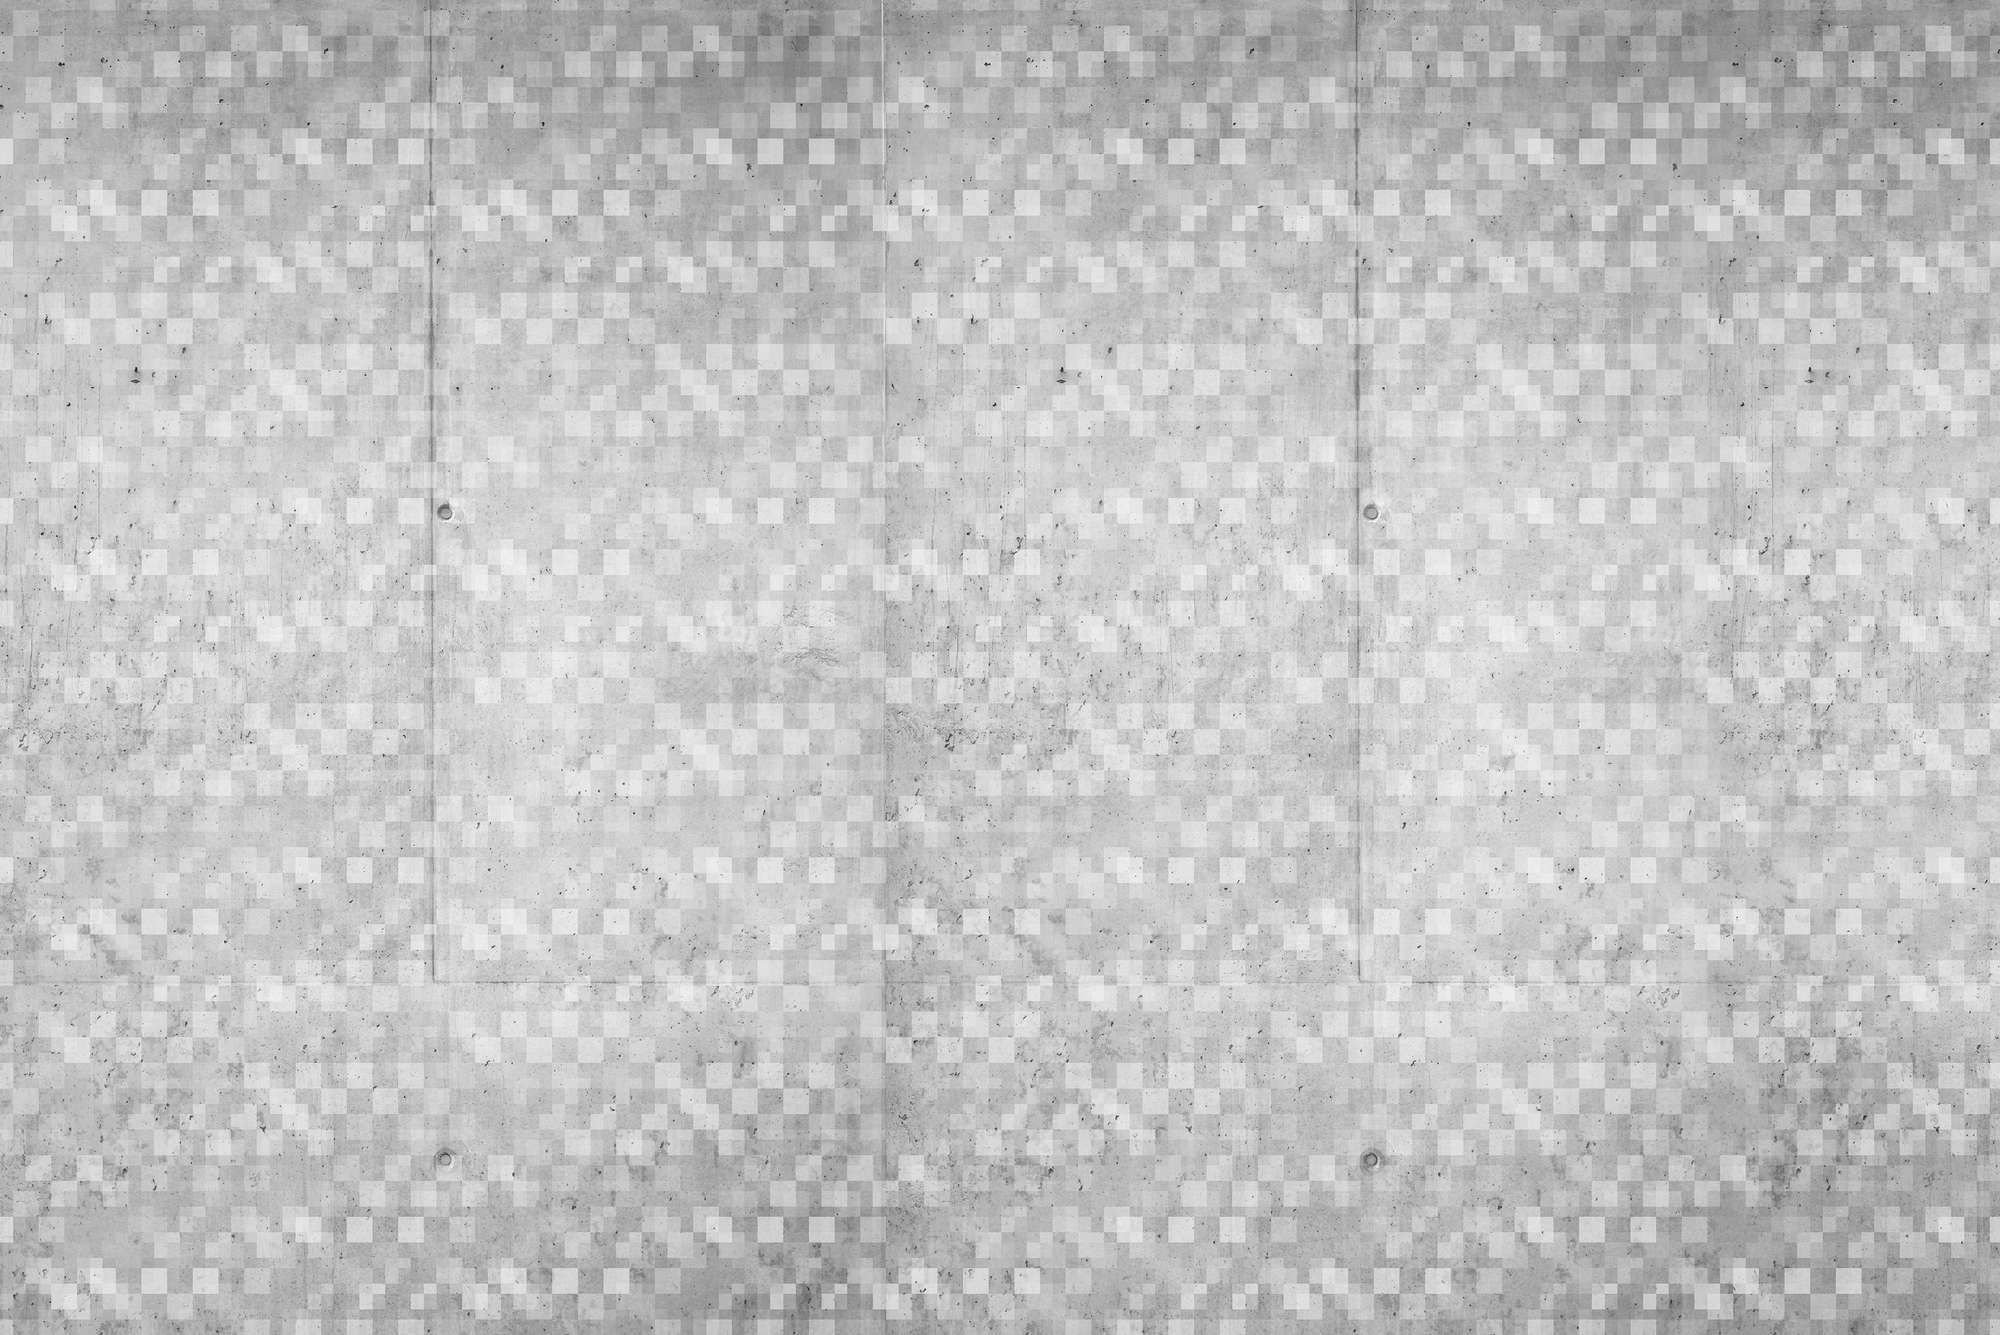             Grafik Fototapete mit überlappendem Würfel Motiv grau auf Perlmutt Glattvlies
        